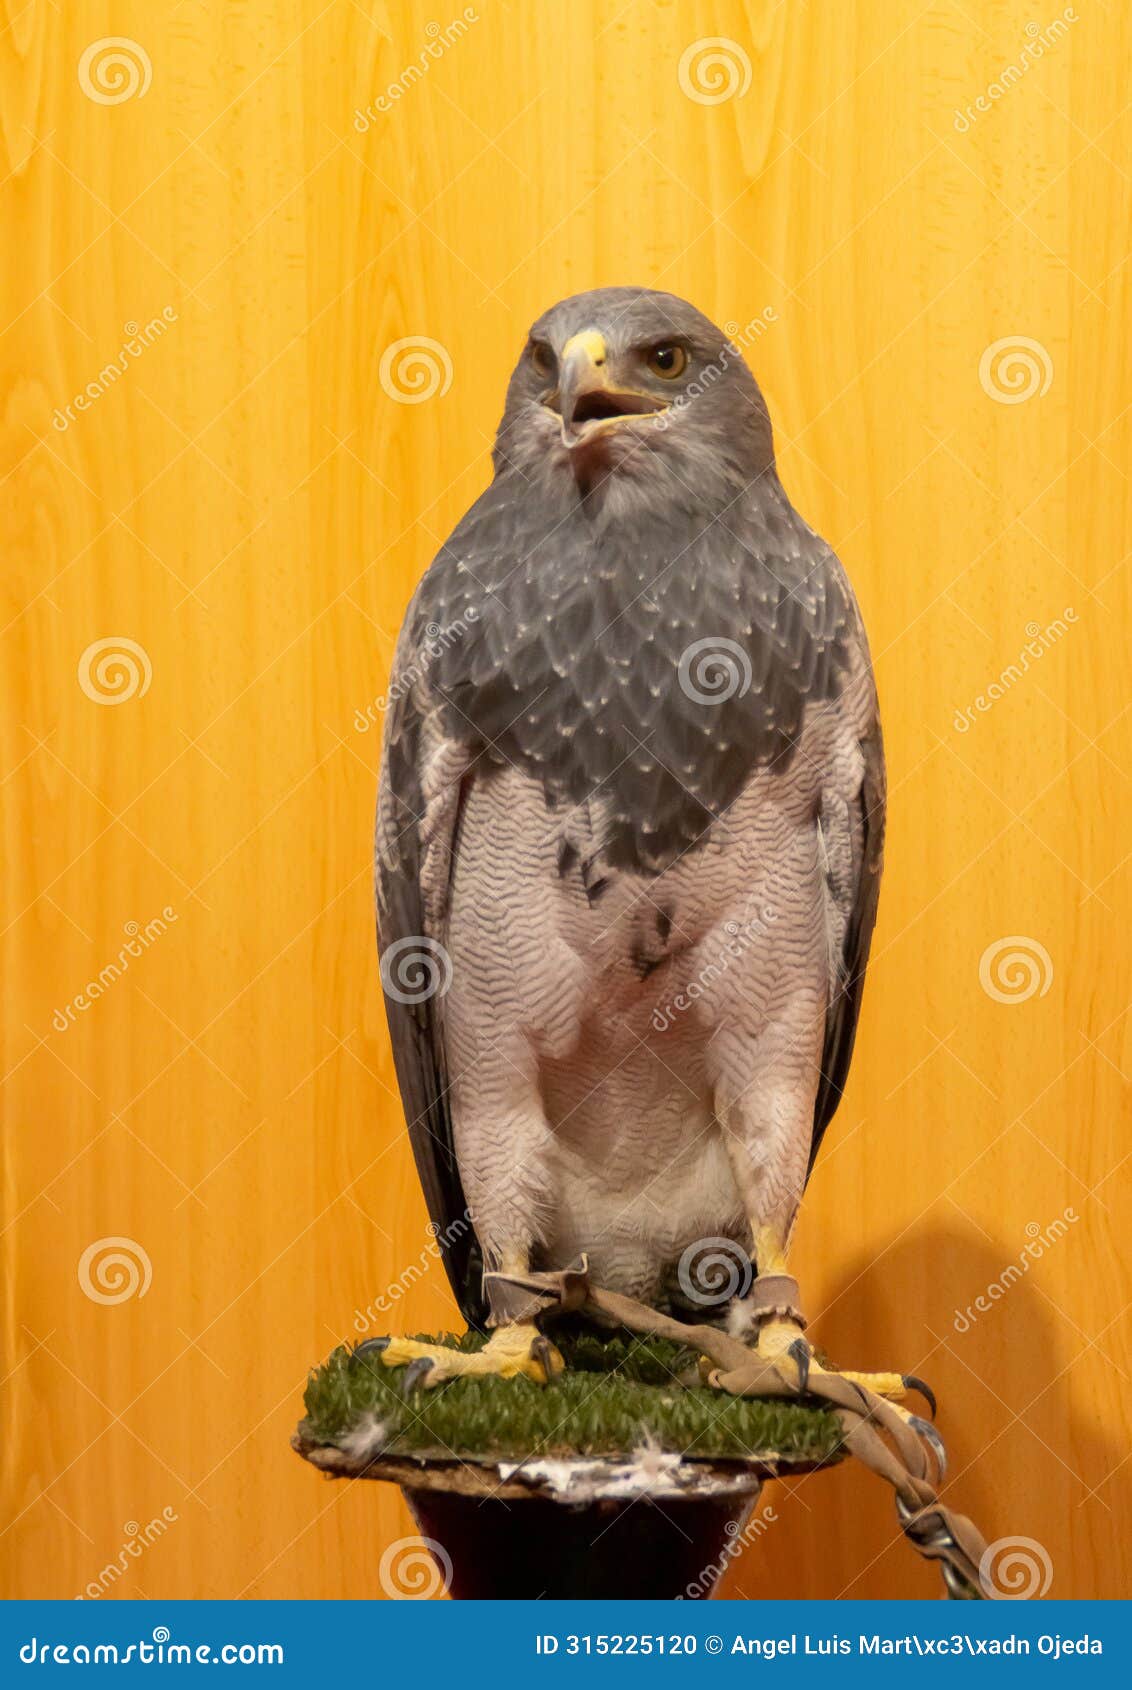 black-chested buzzard-eagle, geranoaetus melanoleucus, bird of prey used in falconry.